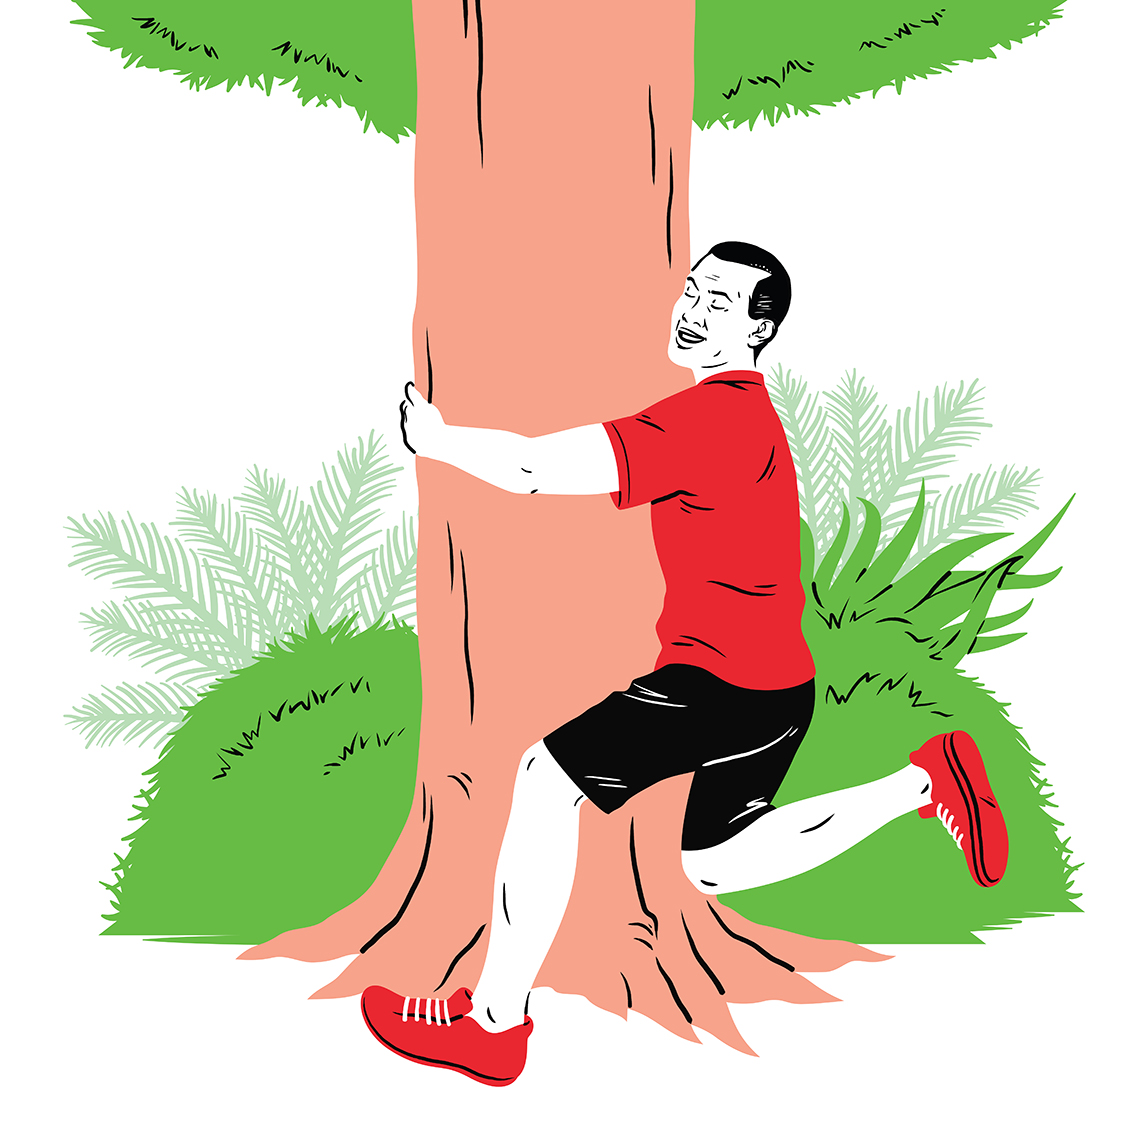 Tree huggers walk